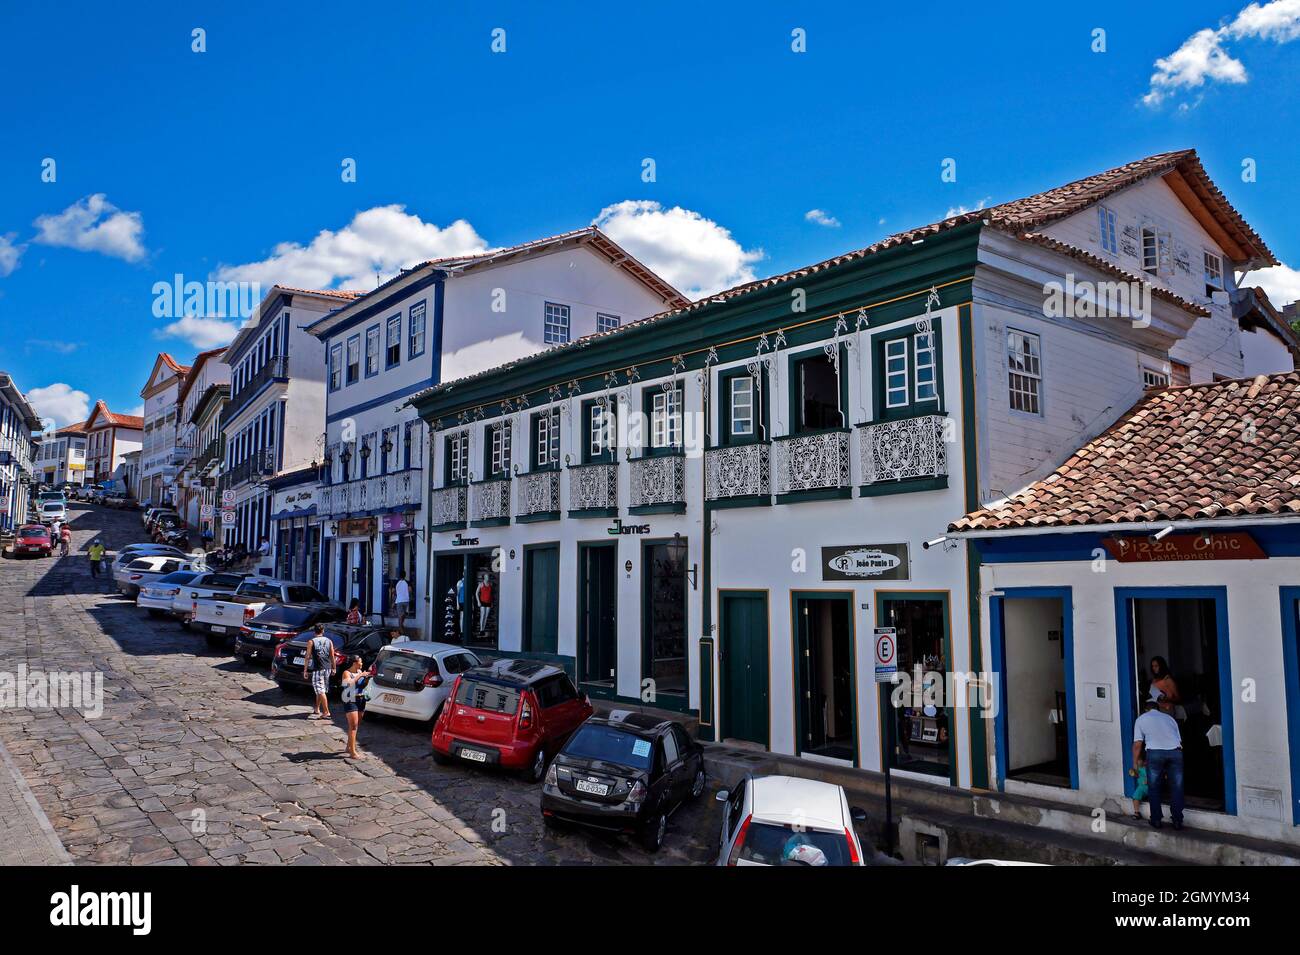 DIAMANTINA, MINAS GERAIS, BRASILE - 22 GENNAIO 2019: Strada tipica nel centro storico della città Foto Stock